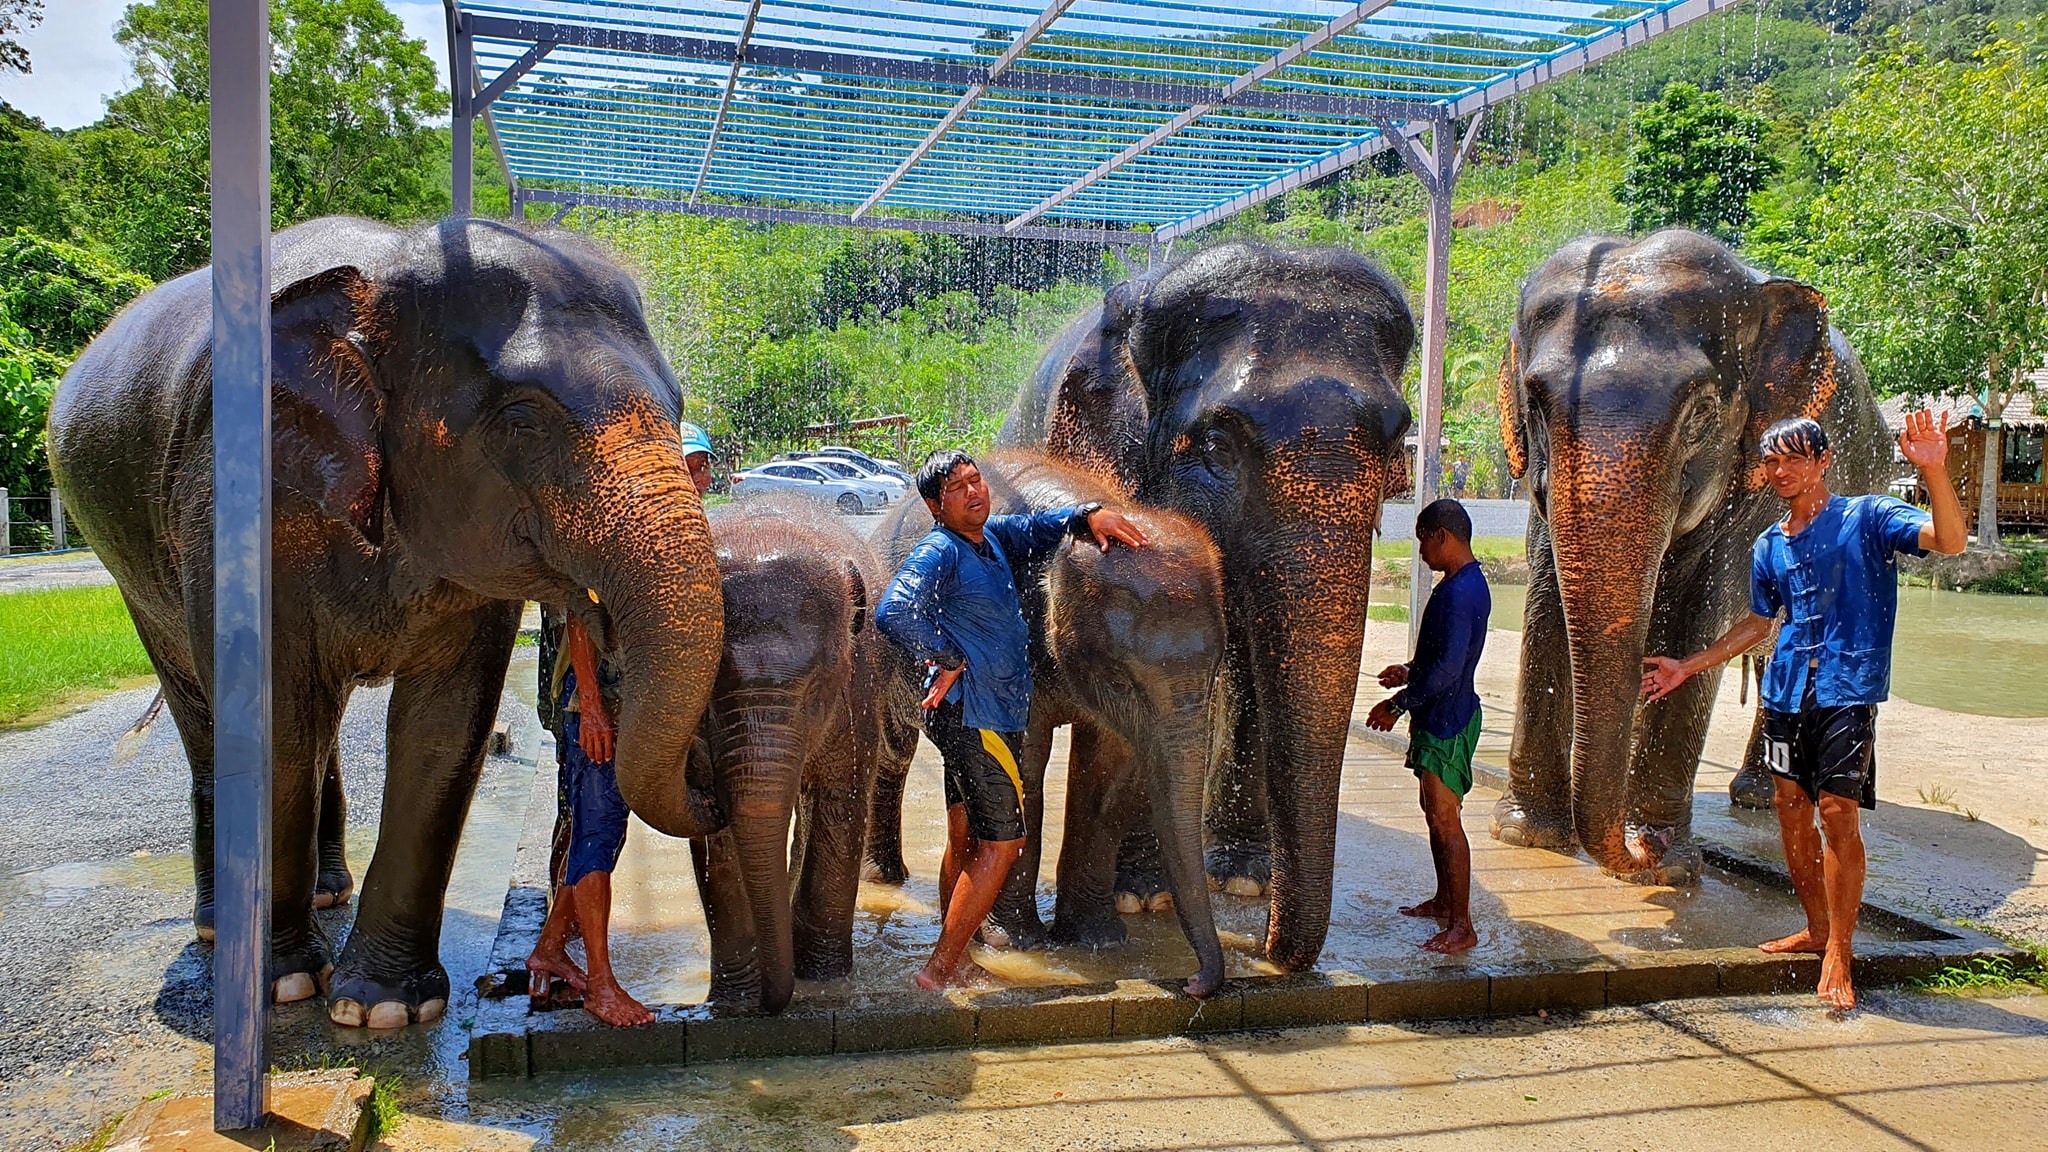 Mahouts cuidando de elefantes en el Parque Green Sanctuary Elephant Park